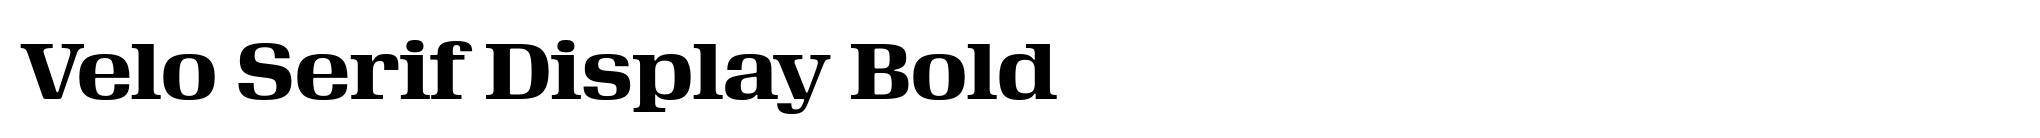 Velo Serif Display Bold image